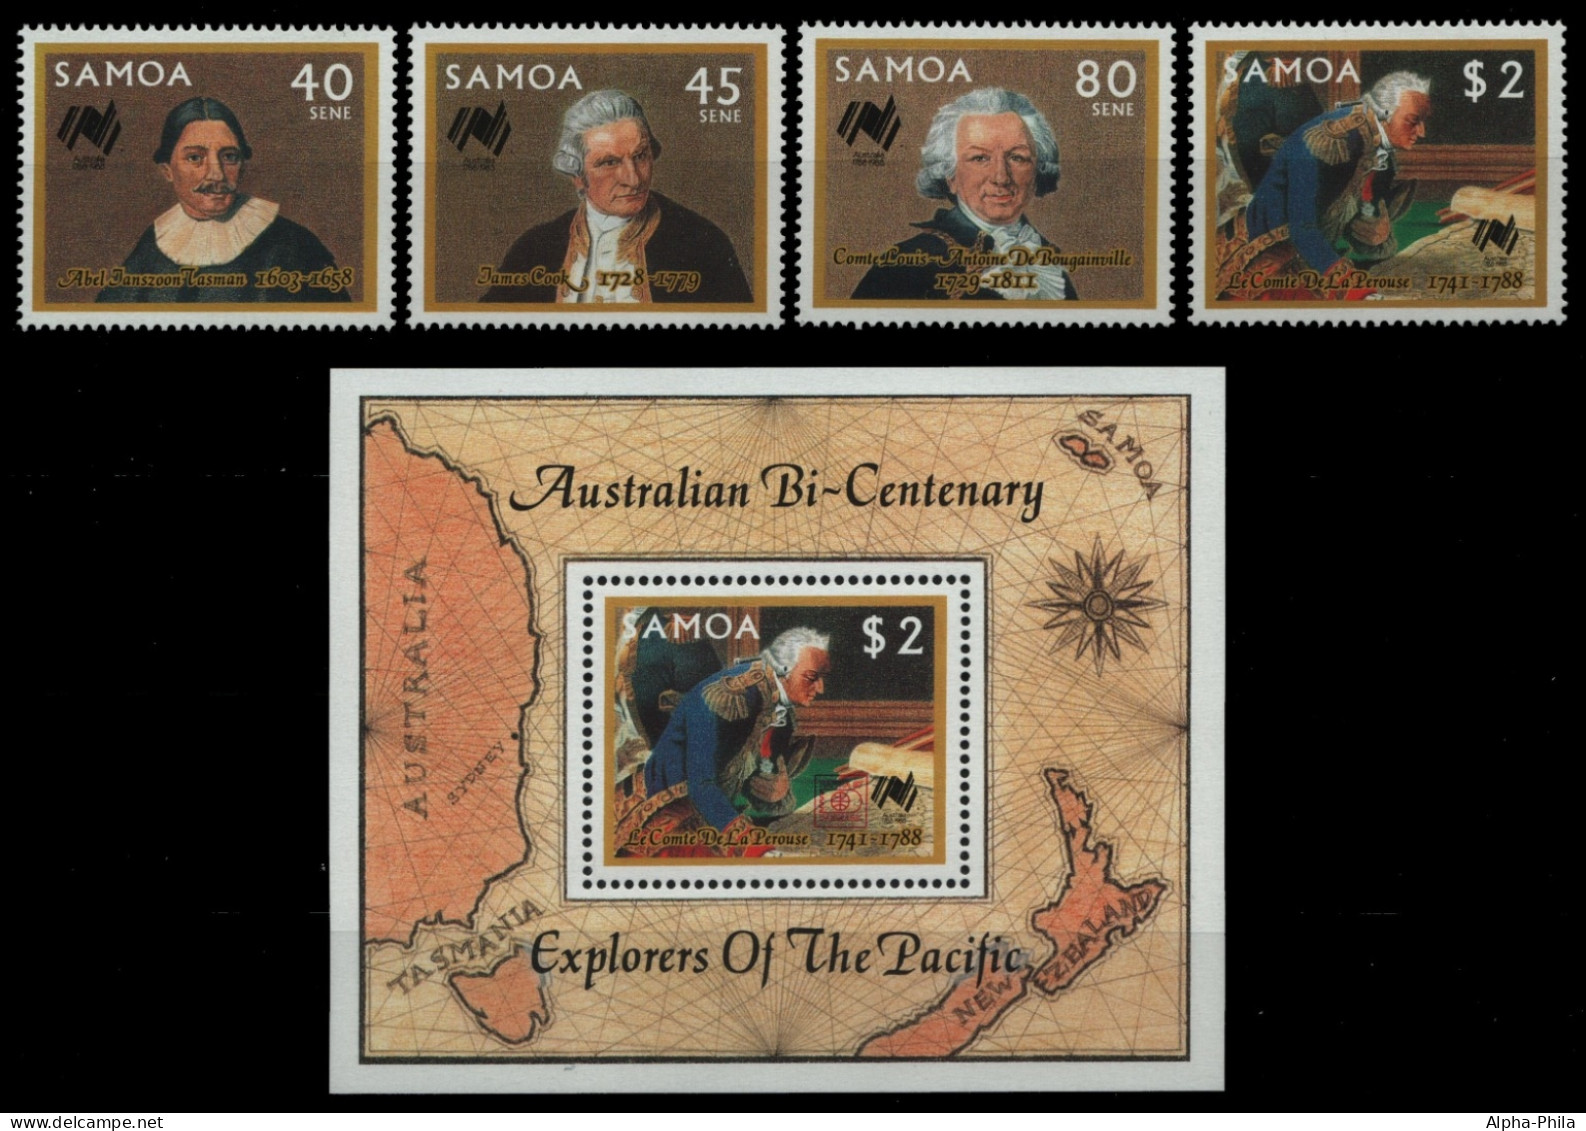 Samoa 1987 - Mi-Nr. 621-624 & Block 42 ** - MNH - Entdecker / Explorers - Amerikanisch-Samoa